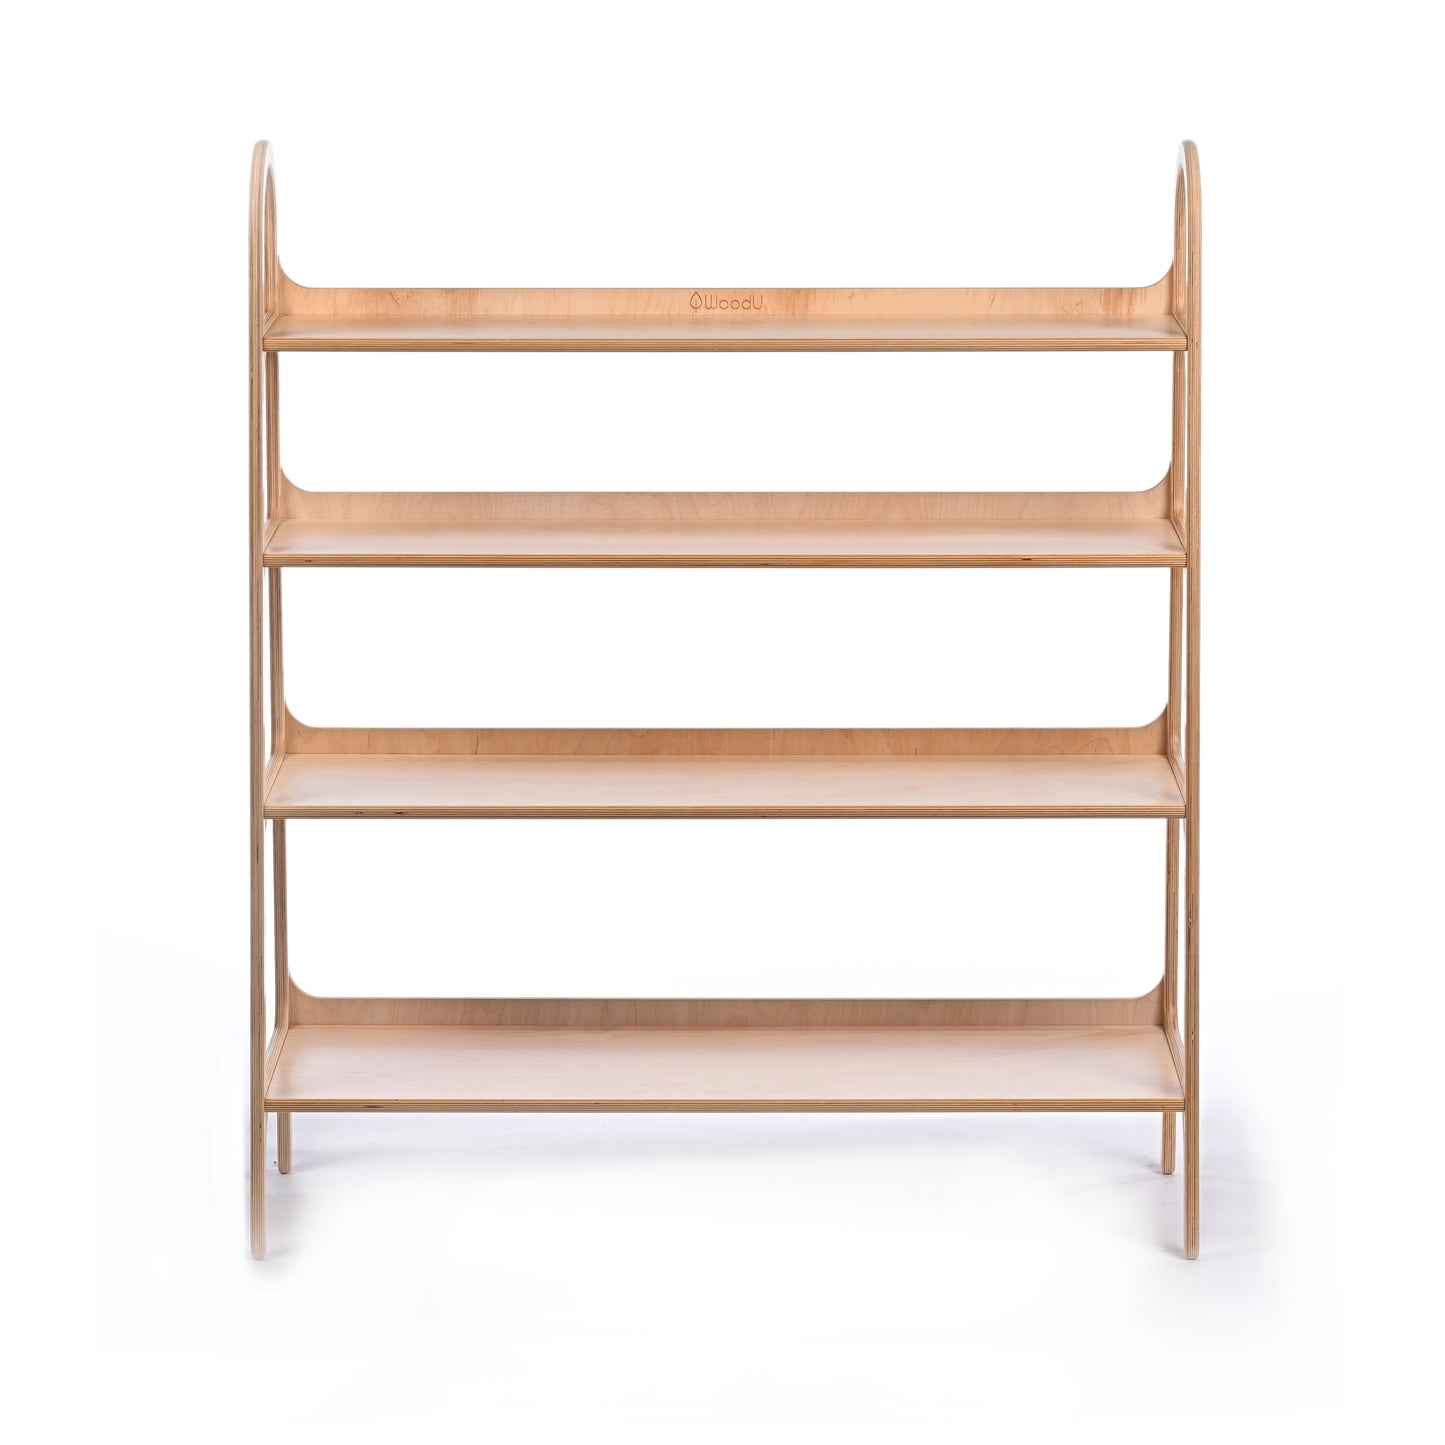 The WoodU Shelf - 4 shelves